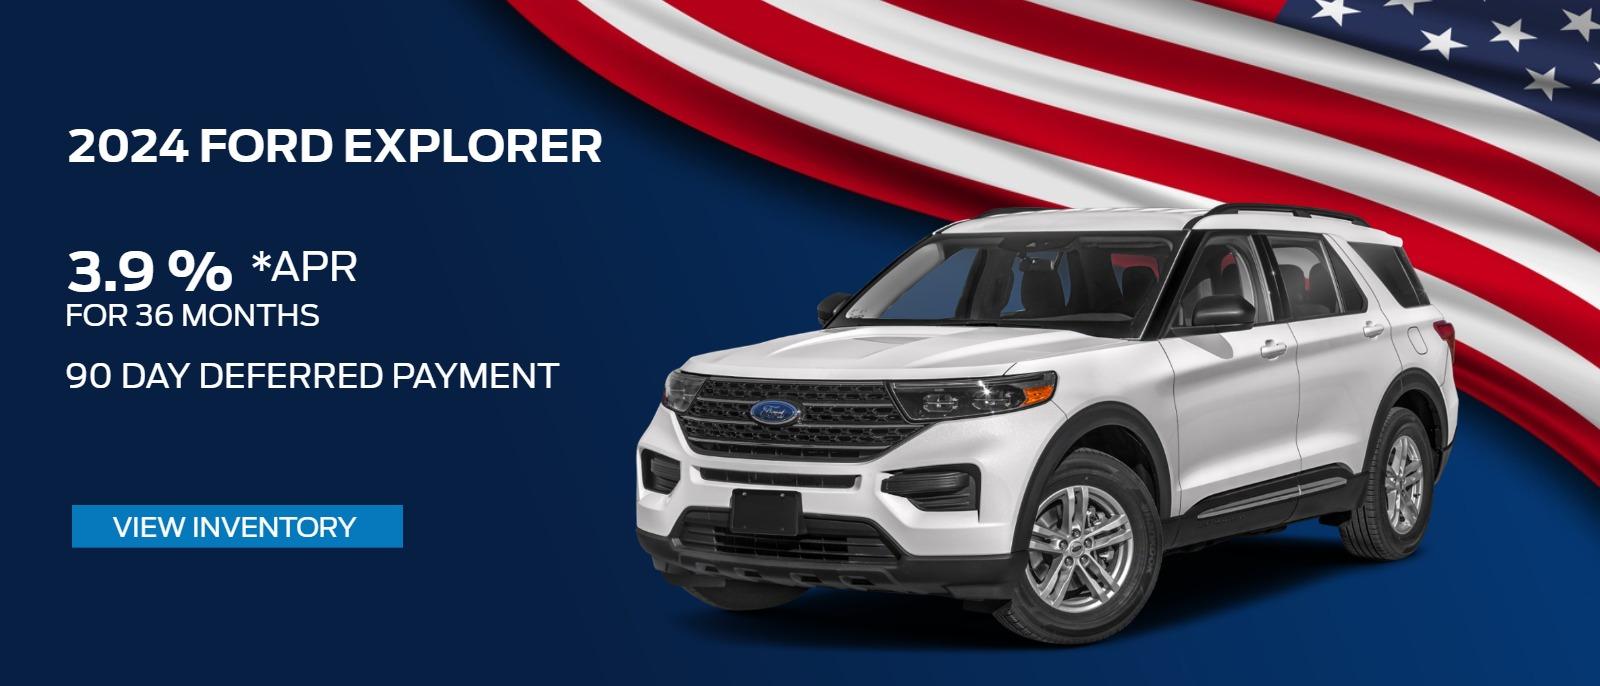 2024 Ford Explorer | patriotic theme